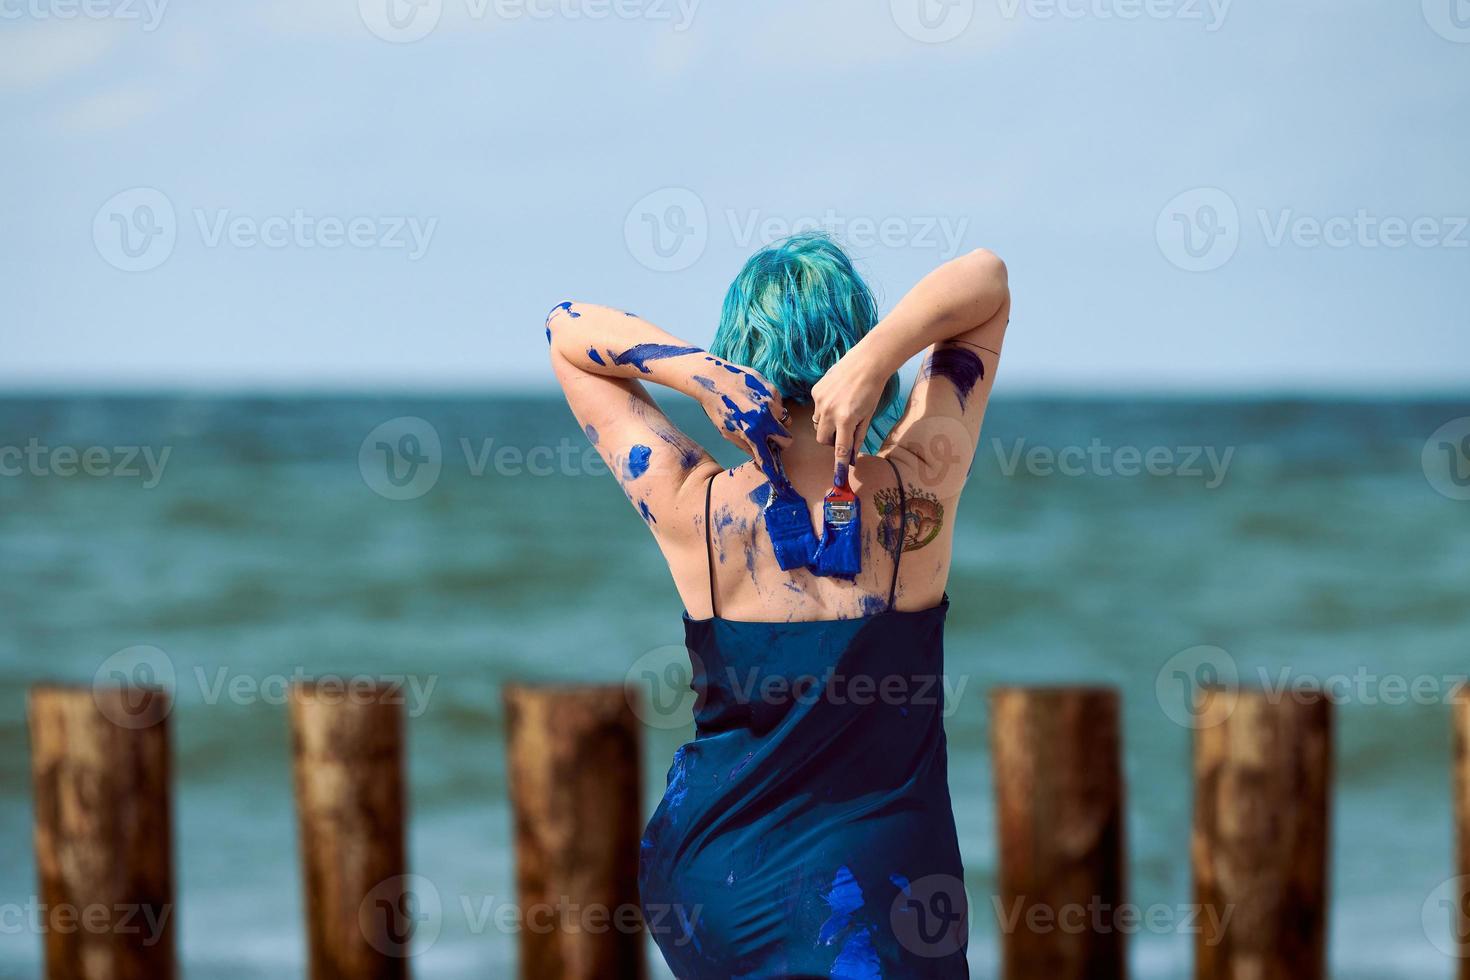 artistieke blauwharige vrouw performancekunstenaar in jurk besmeurd met blauwe gouacheverf op haar lichaam foto